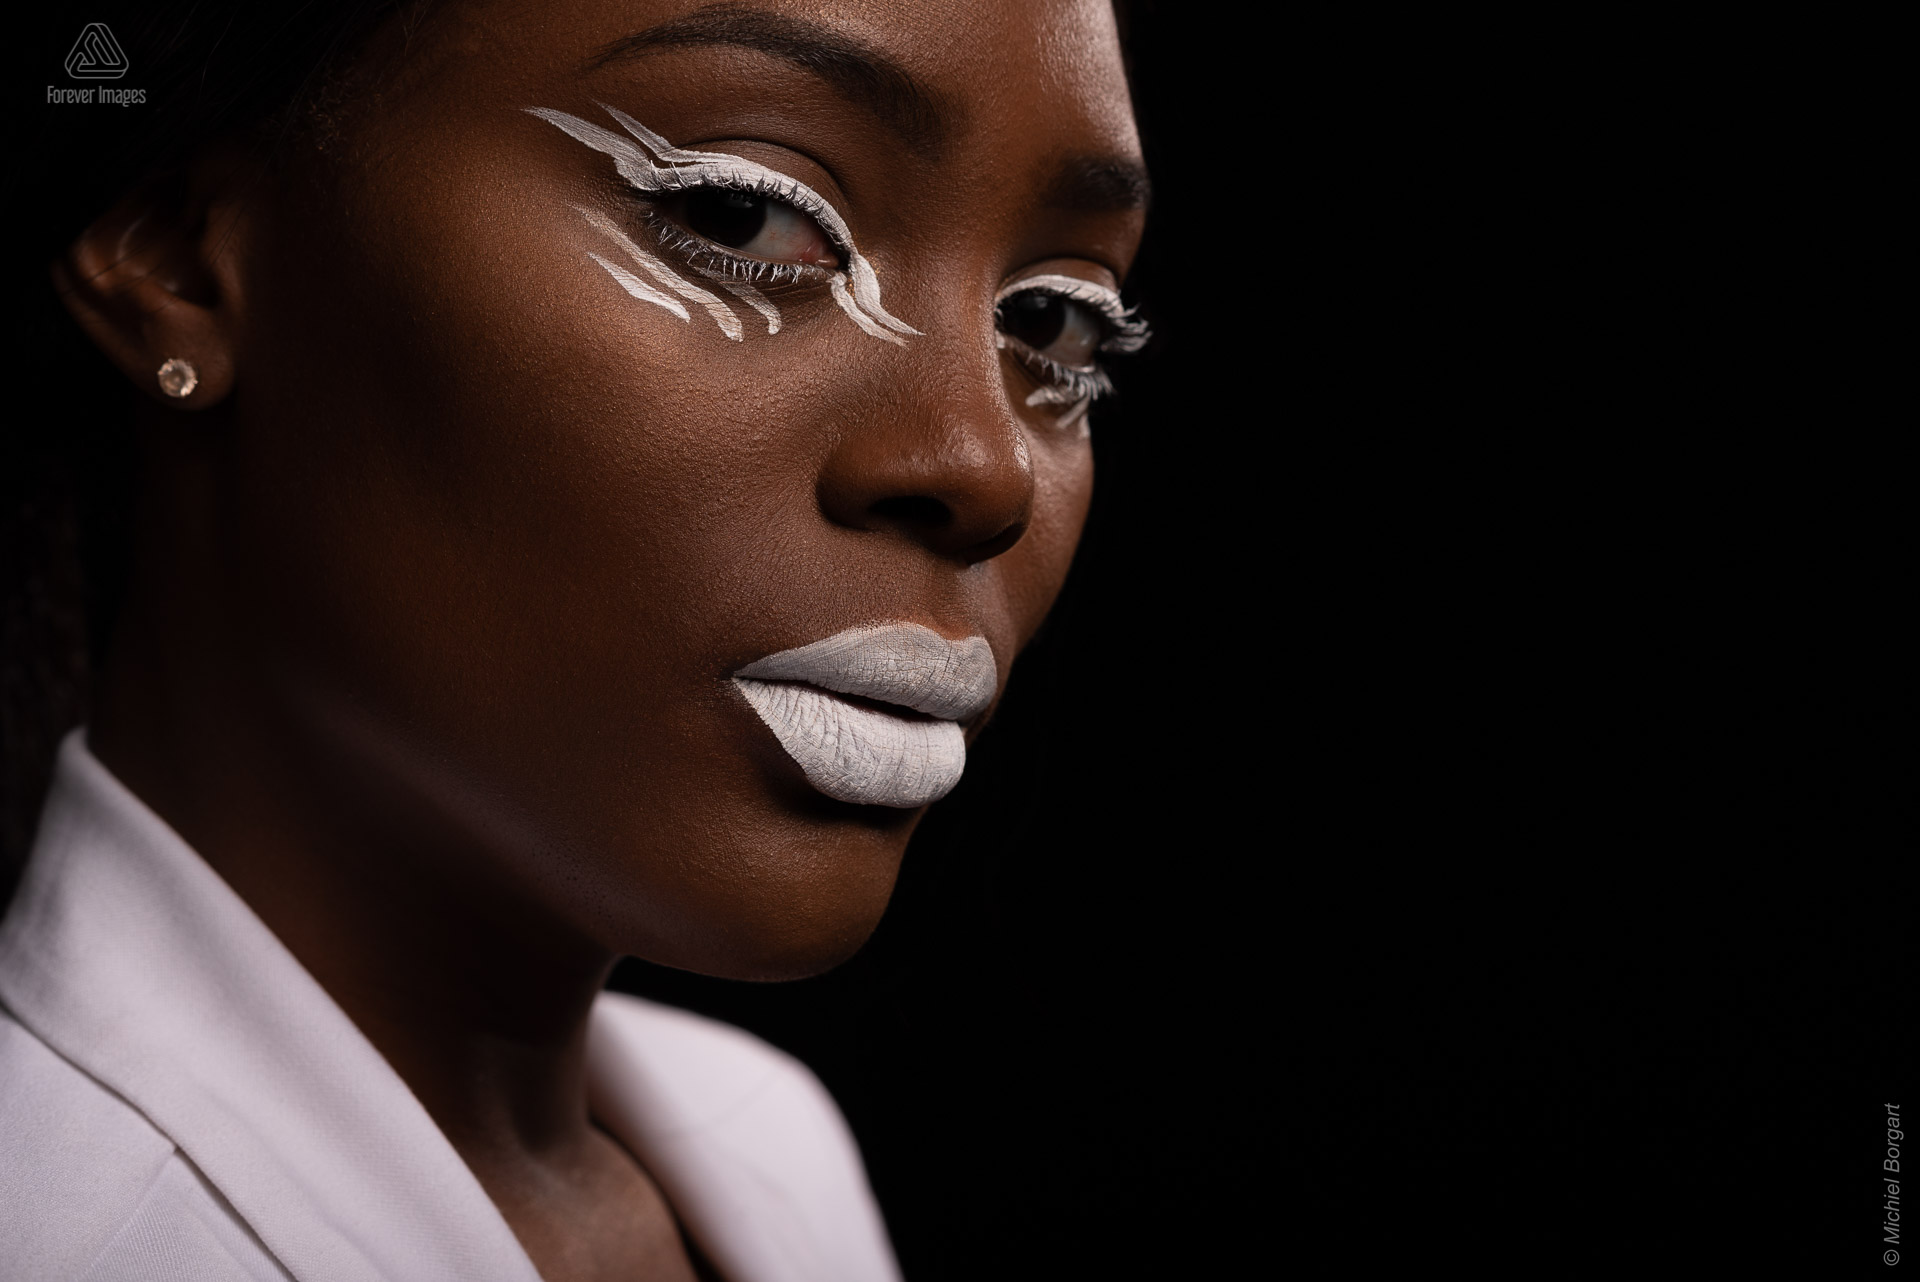 Portretfoto glamourshoot witte make-up kijkend in camera | Mariana Pietersz Natasha Mondesir | Portretfotograaf Michiel Borgart - Forever Images.